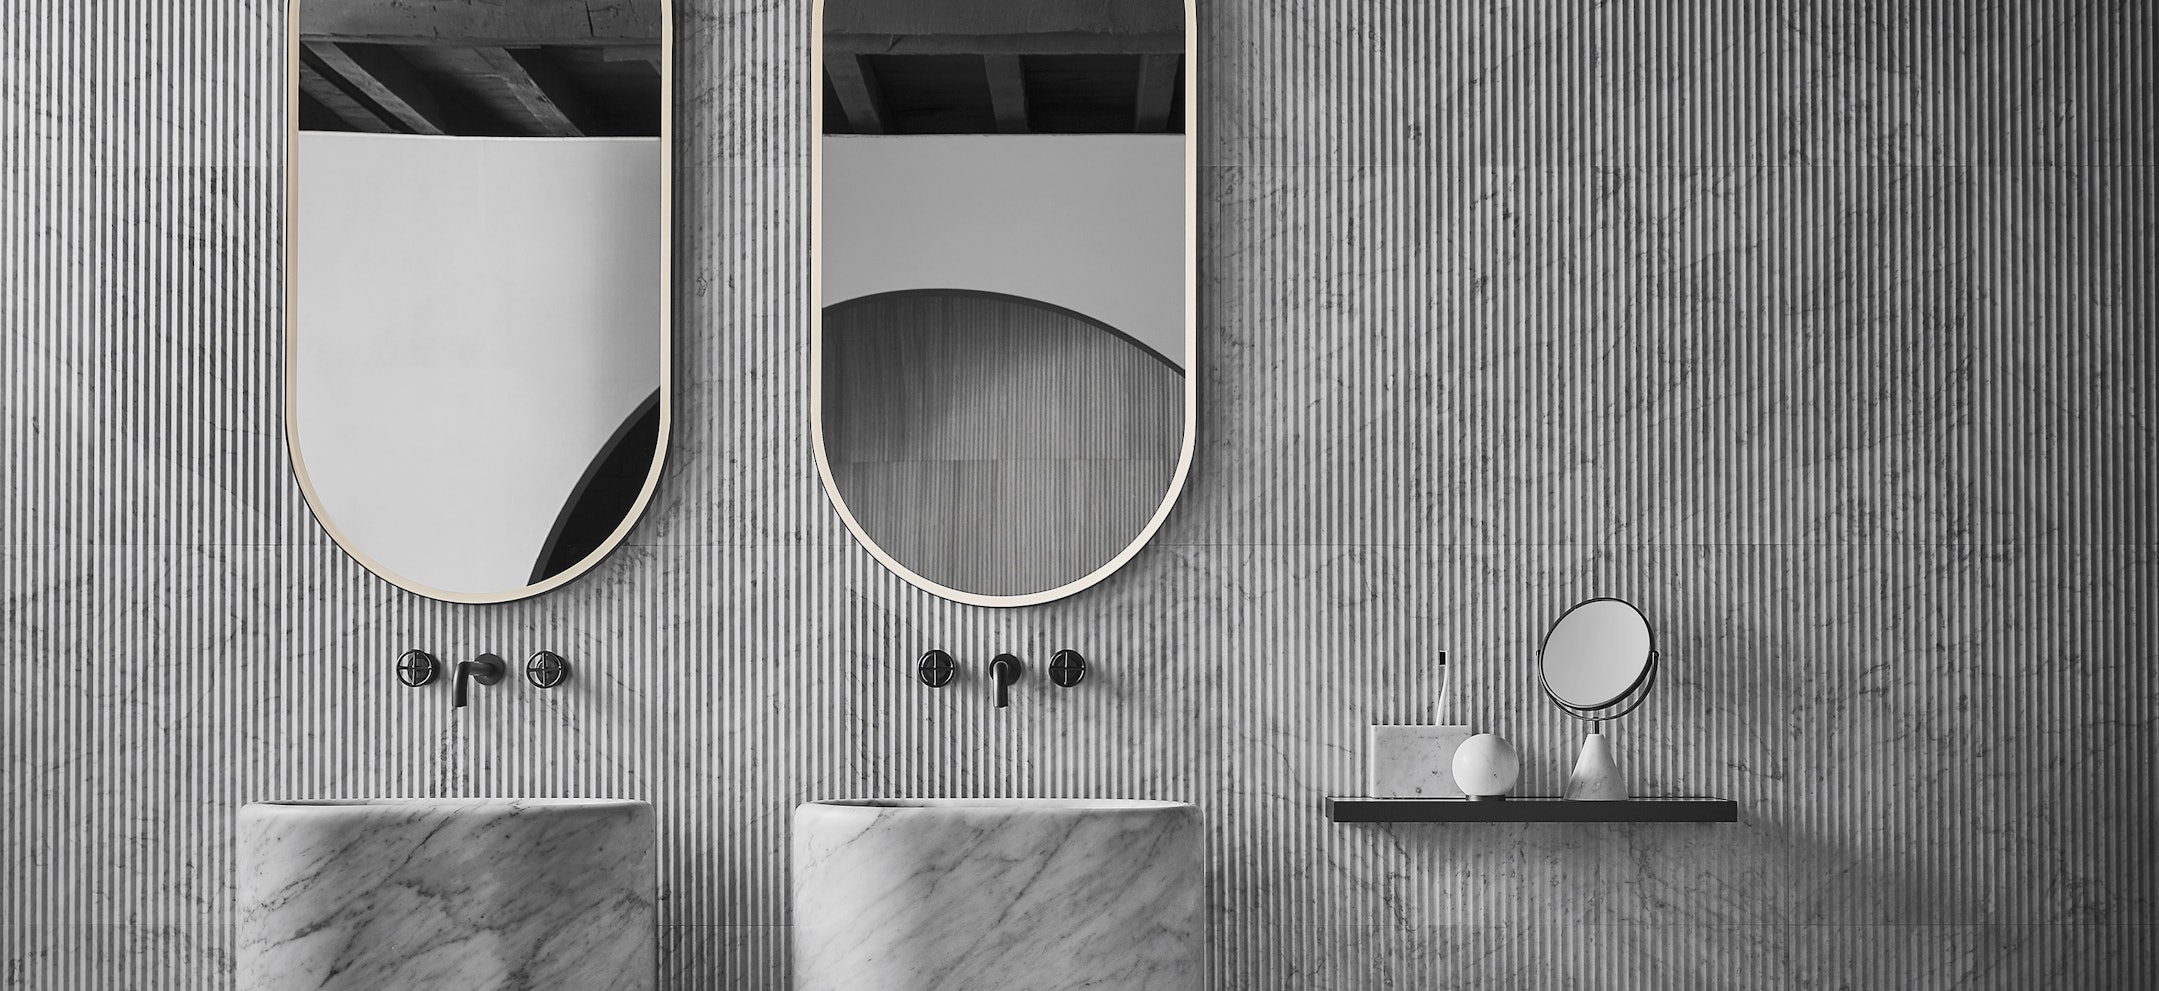 Mirari designer bathroom mirror, Wall-mounted mirrors